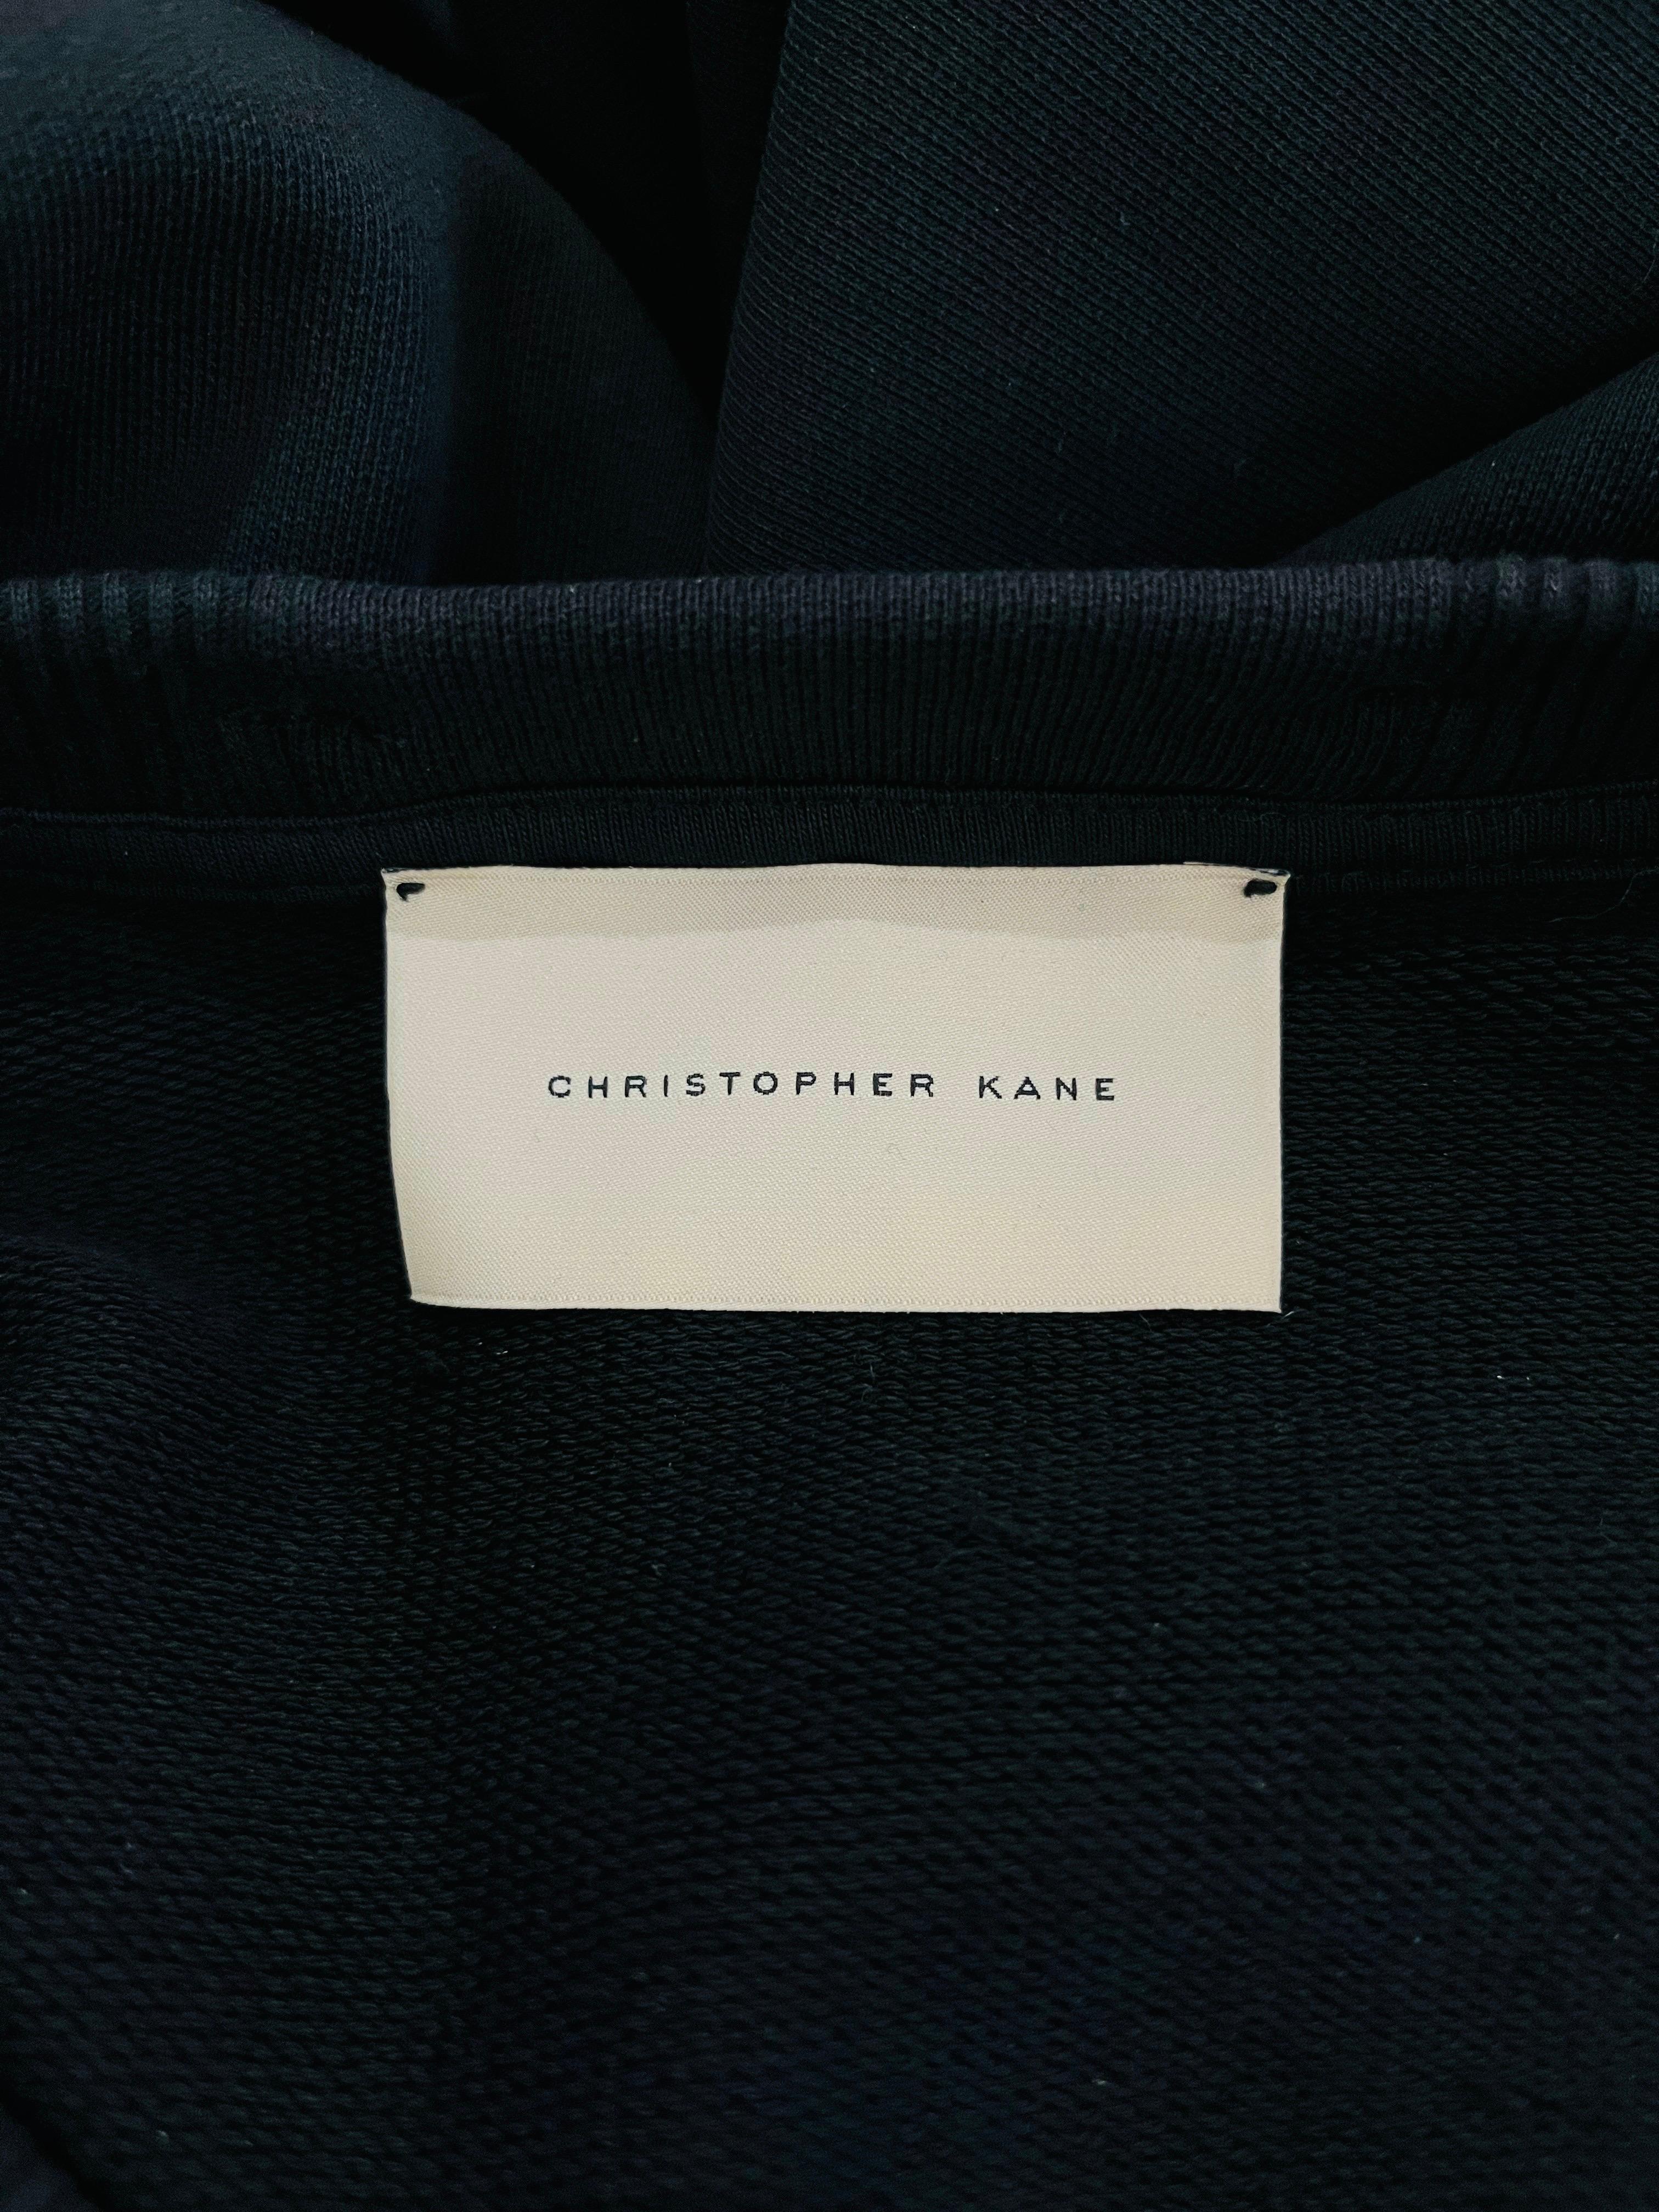 Christopher Kane Cotton Sweatshirt Dress For Sale 2